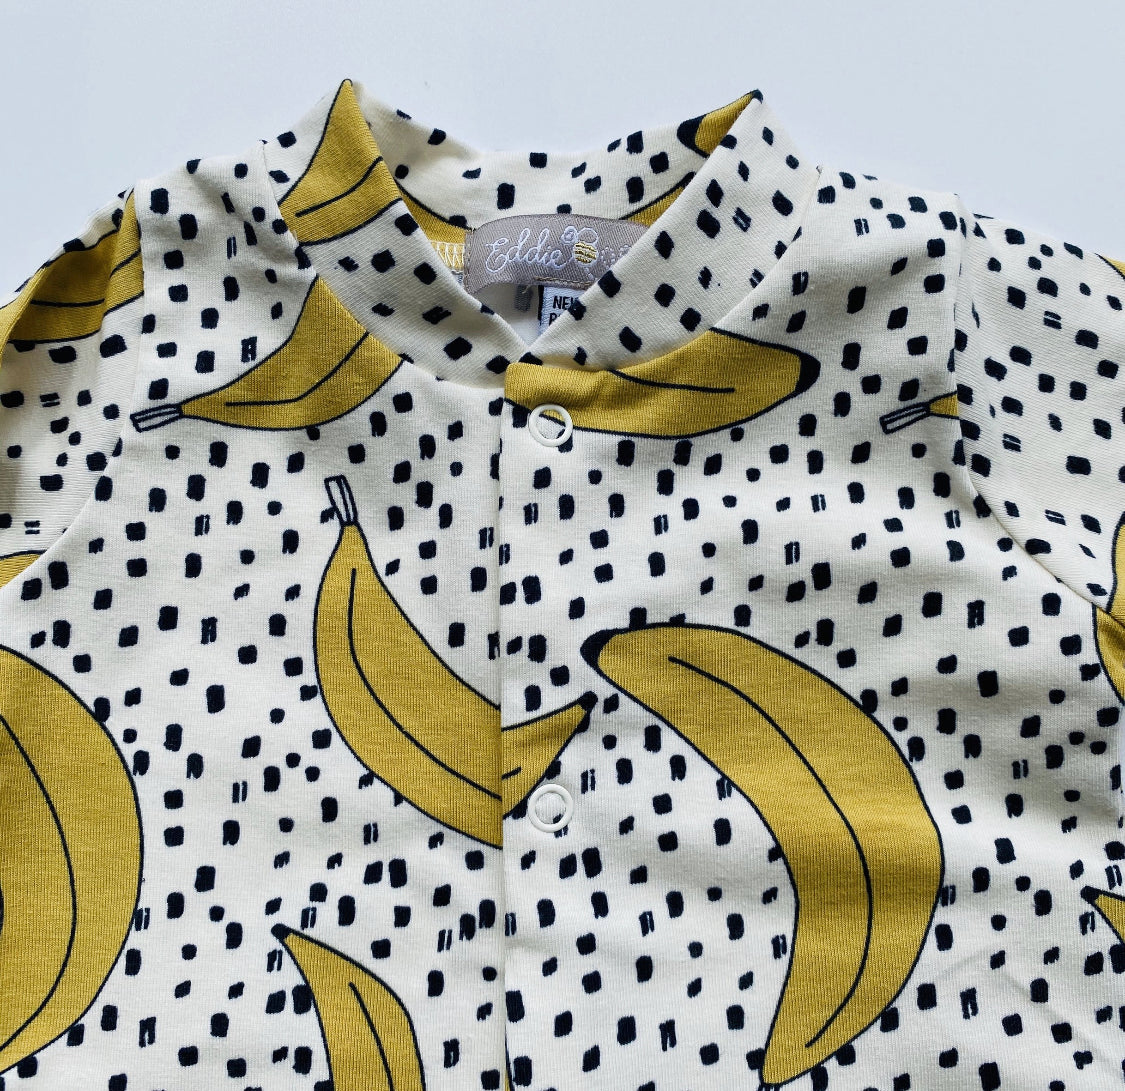 Eddie & Bee organic cotton Baby sleepsuit  in Cream "Banana POP" print.